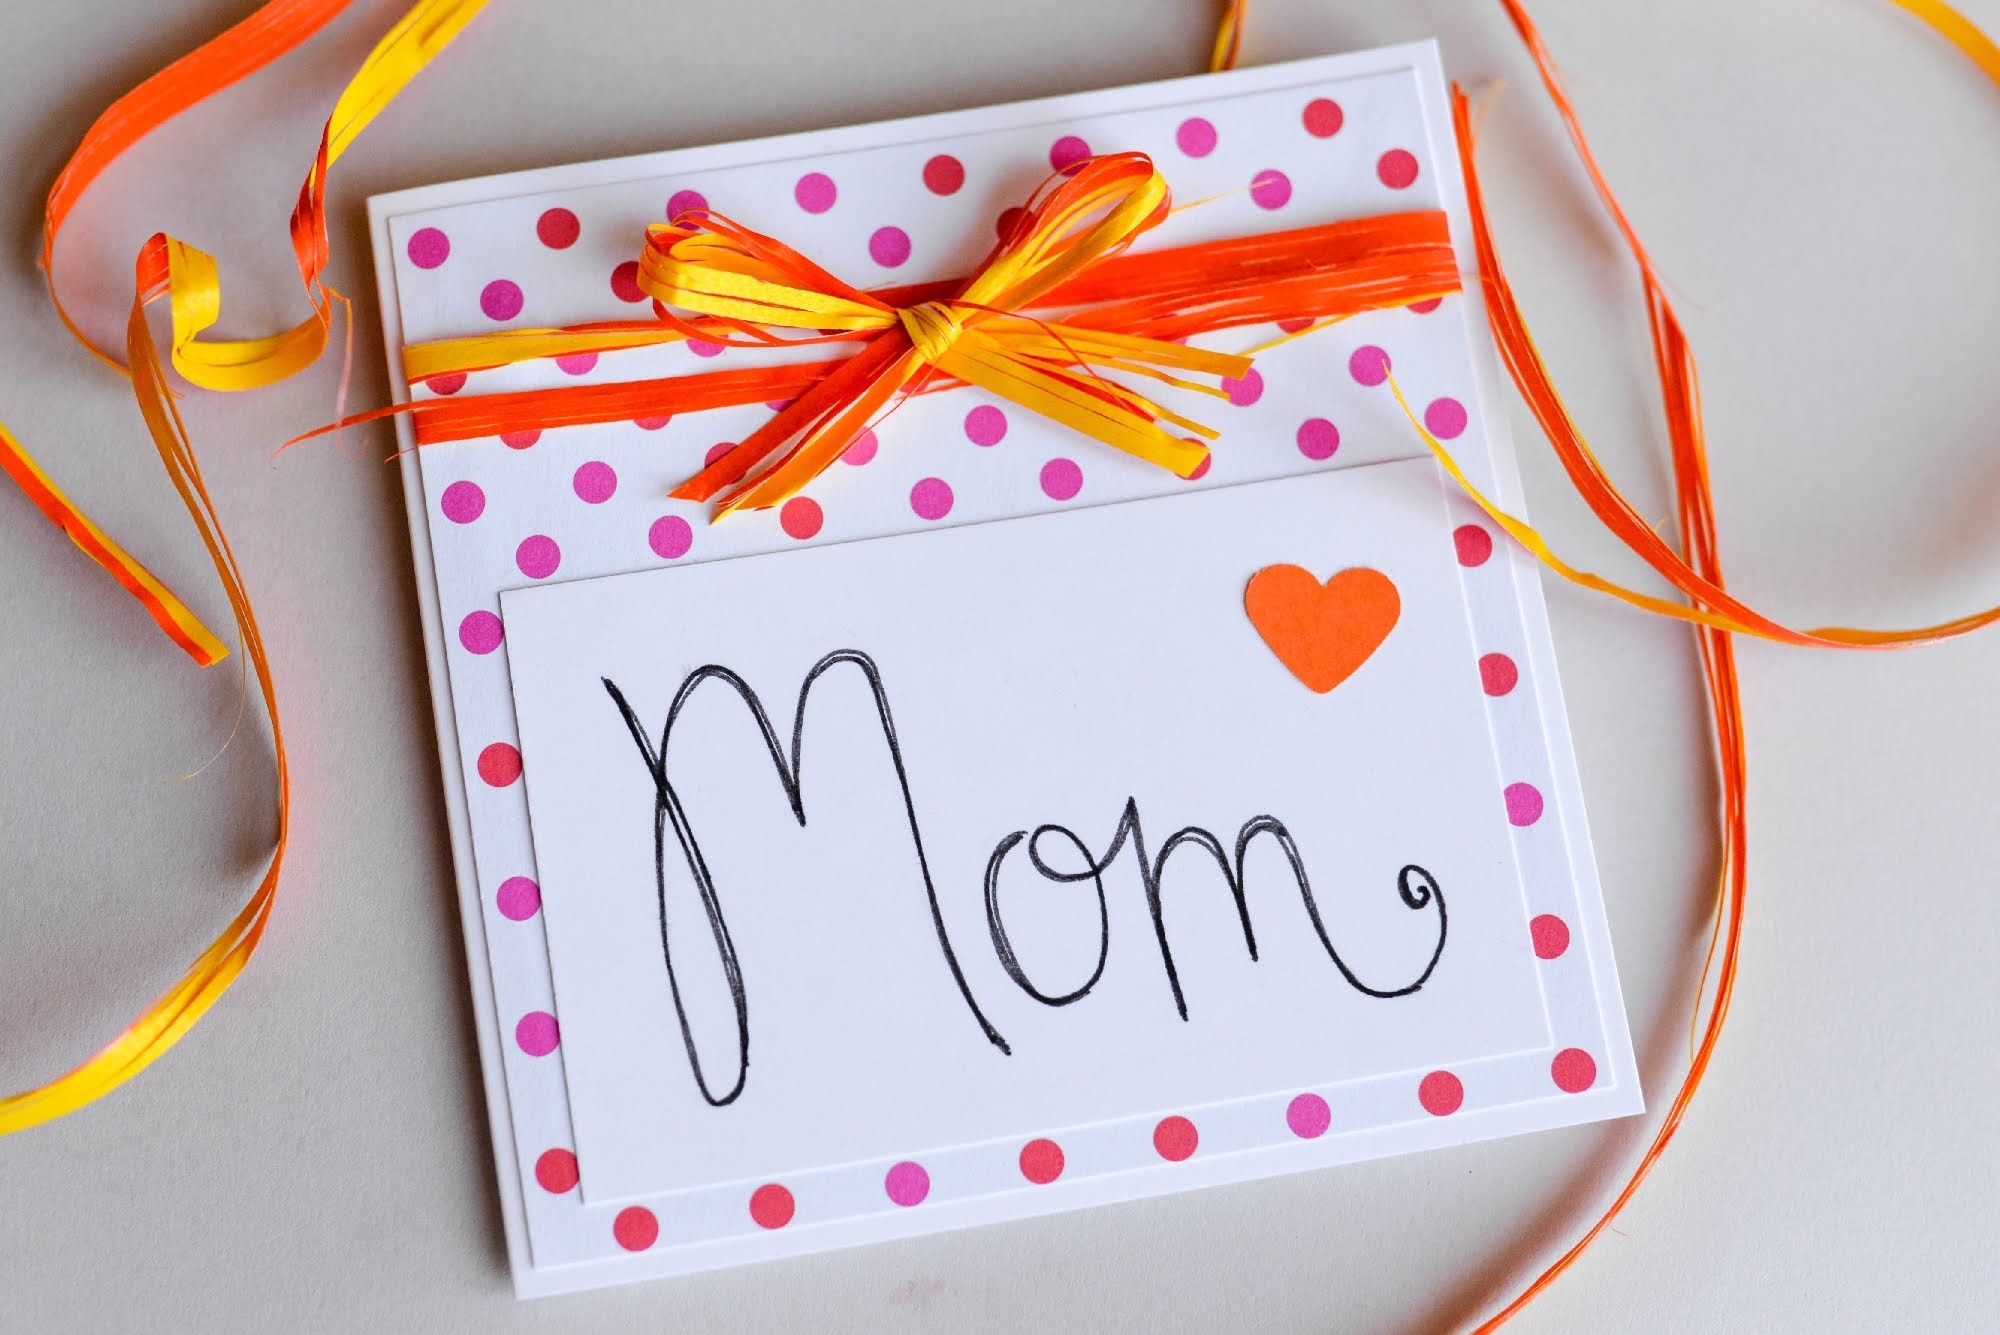 How to Make - Easy Greeting Card Mother's Day - Step by Step | Kartka Na Dzień Matki